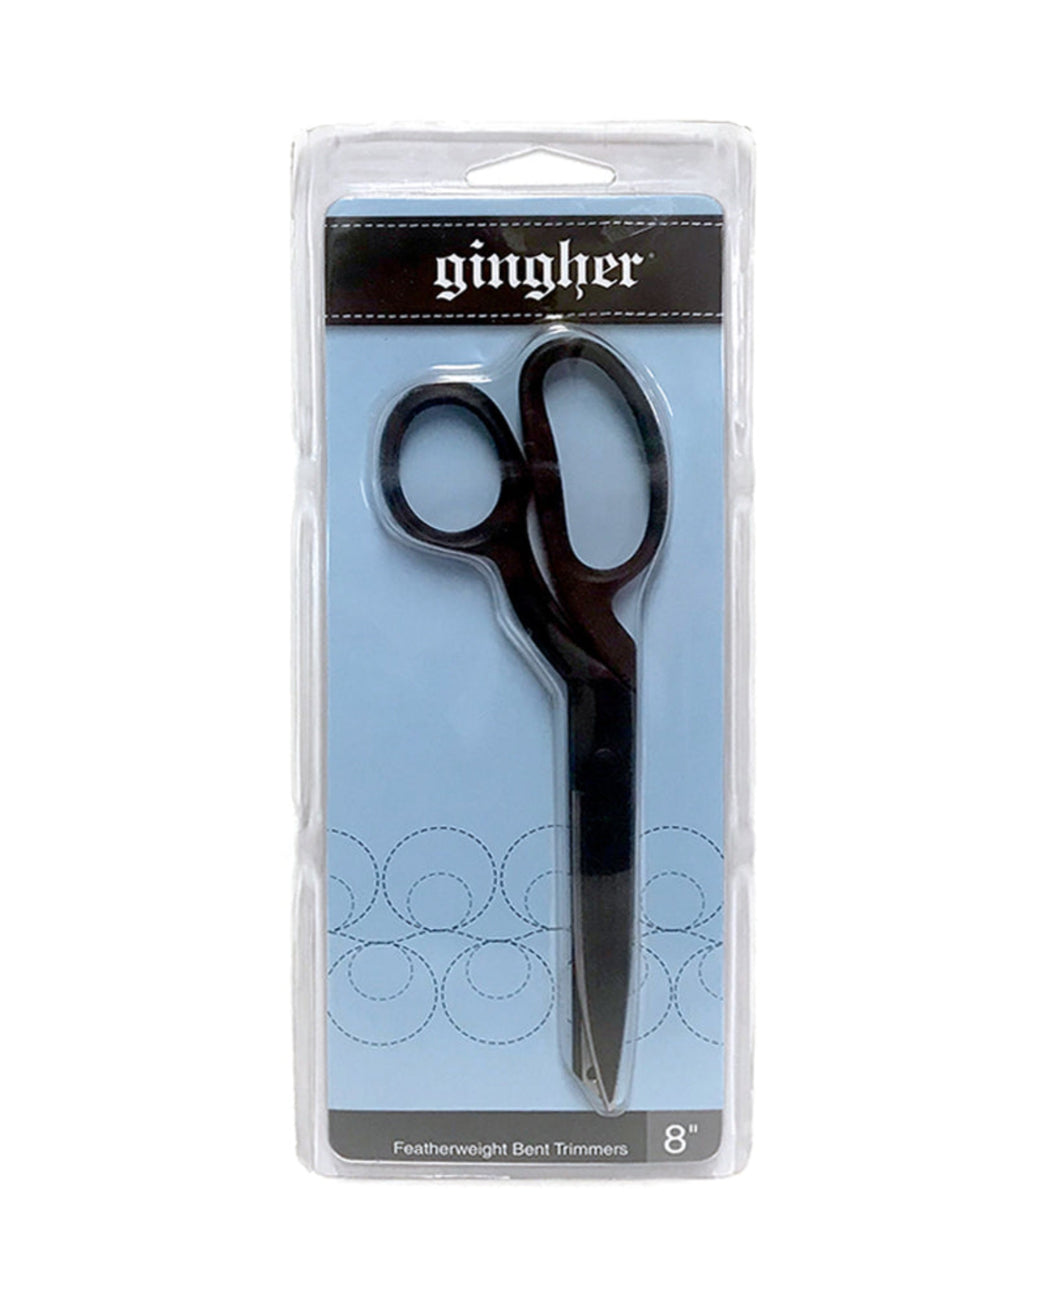 Featherweight bent trimmer 8" - Zipper and Thread